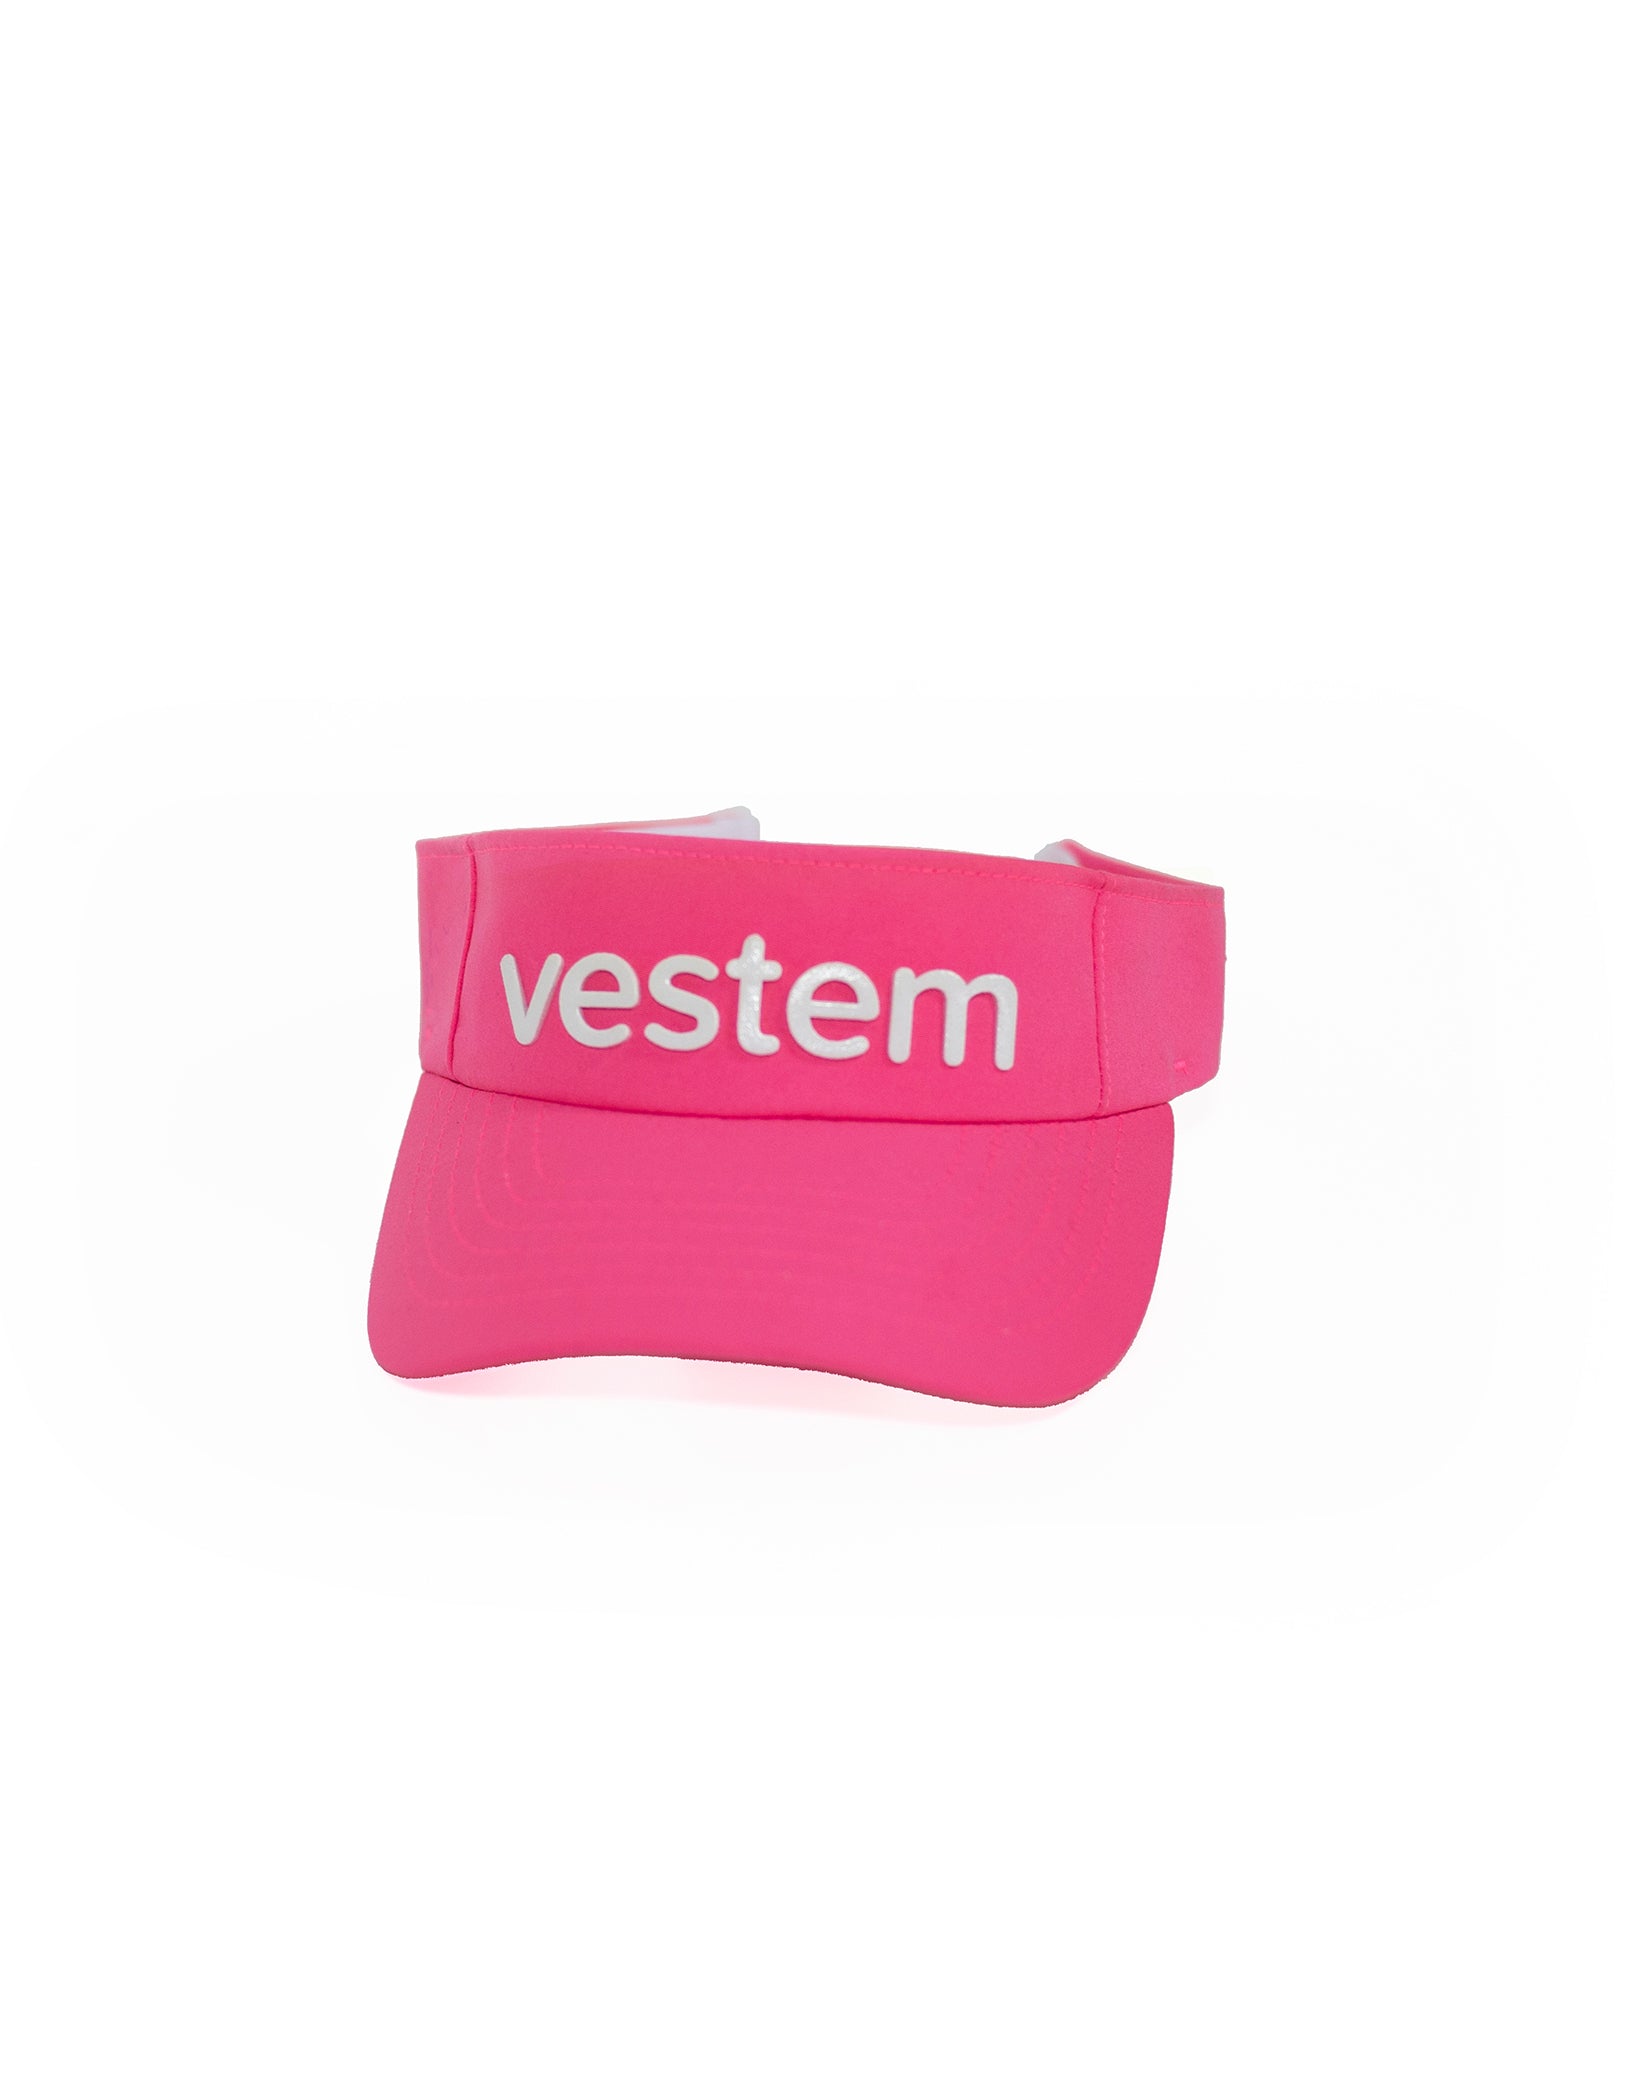 Vestem - Visor Wear Pink Neon Pink - VS18C003